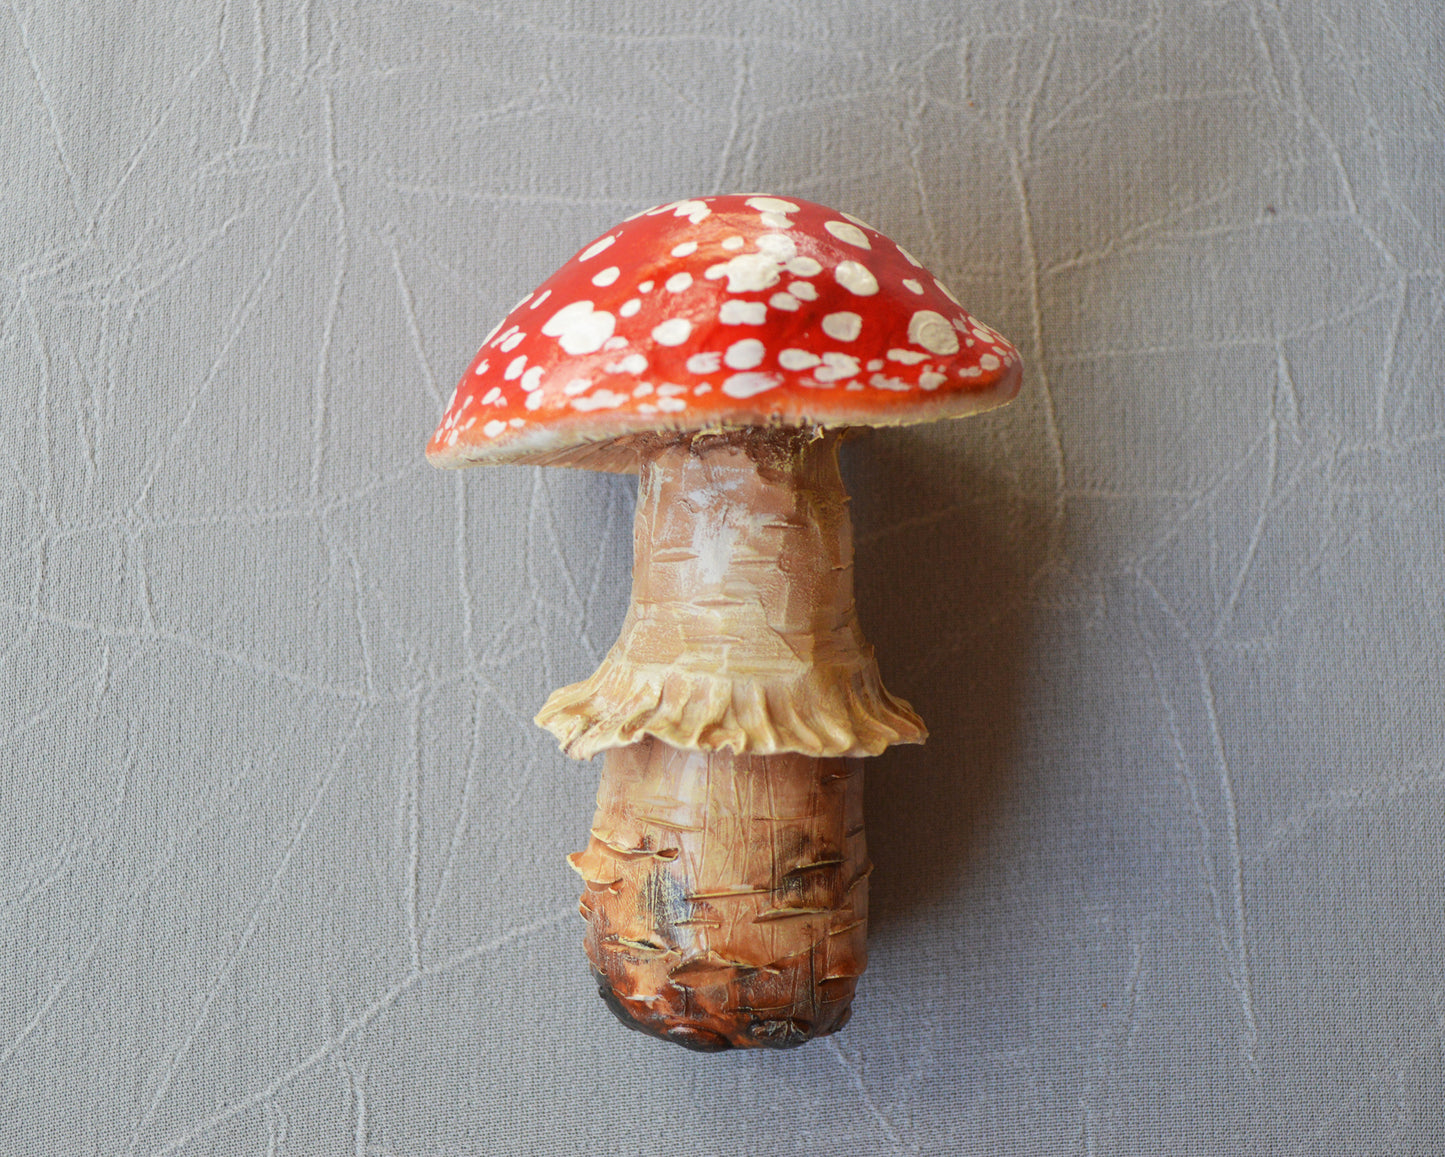 Realistic red cap mushroom "Amanita Muscaria" decor art object